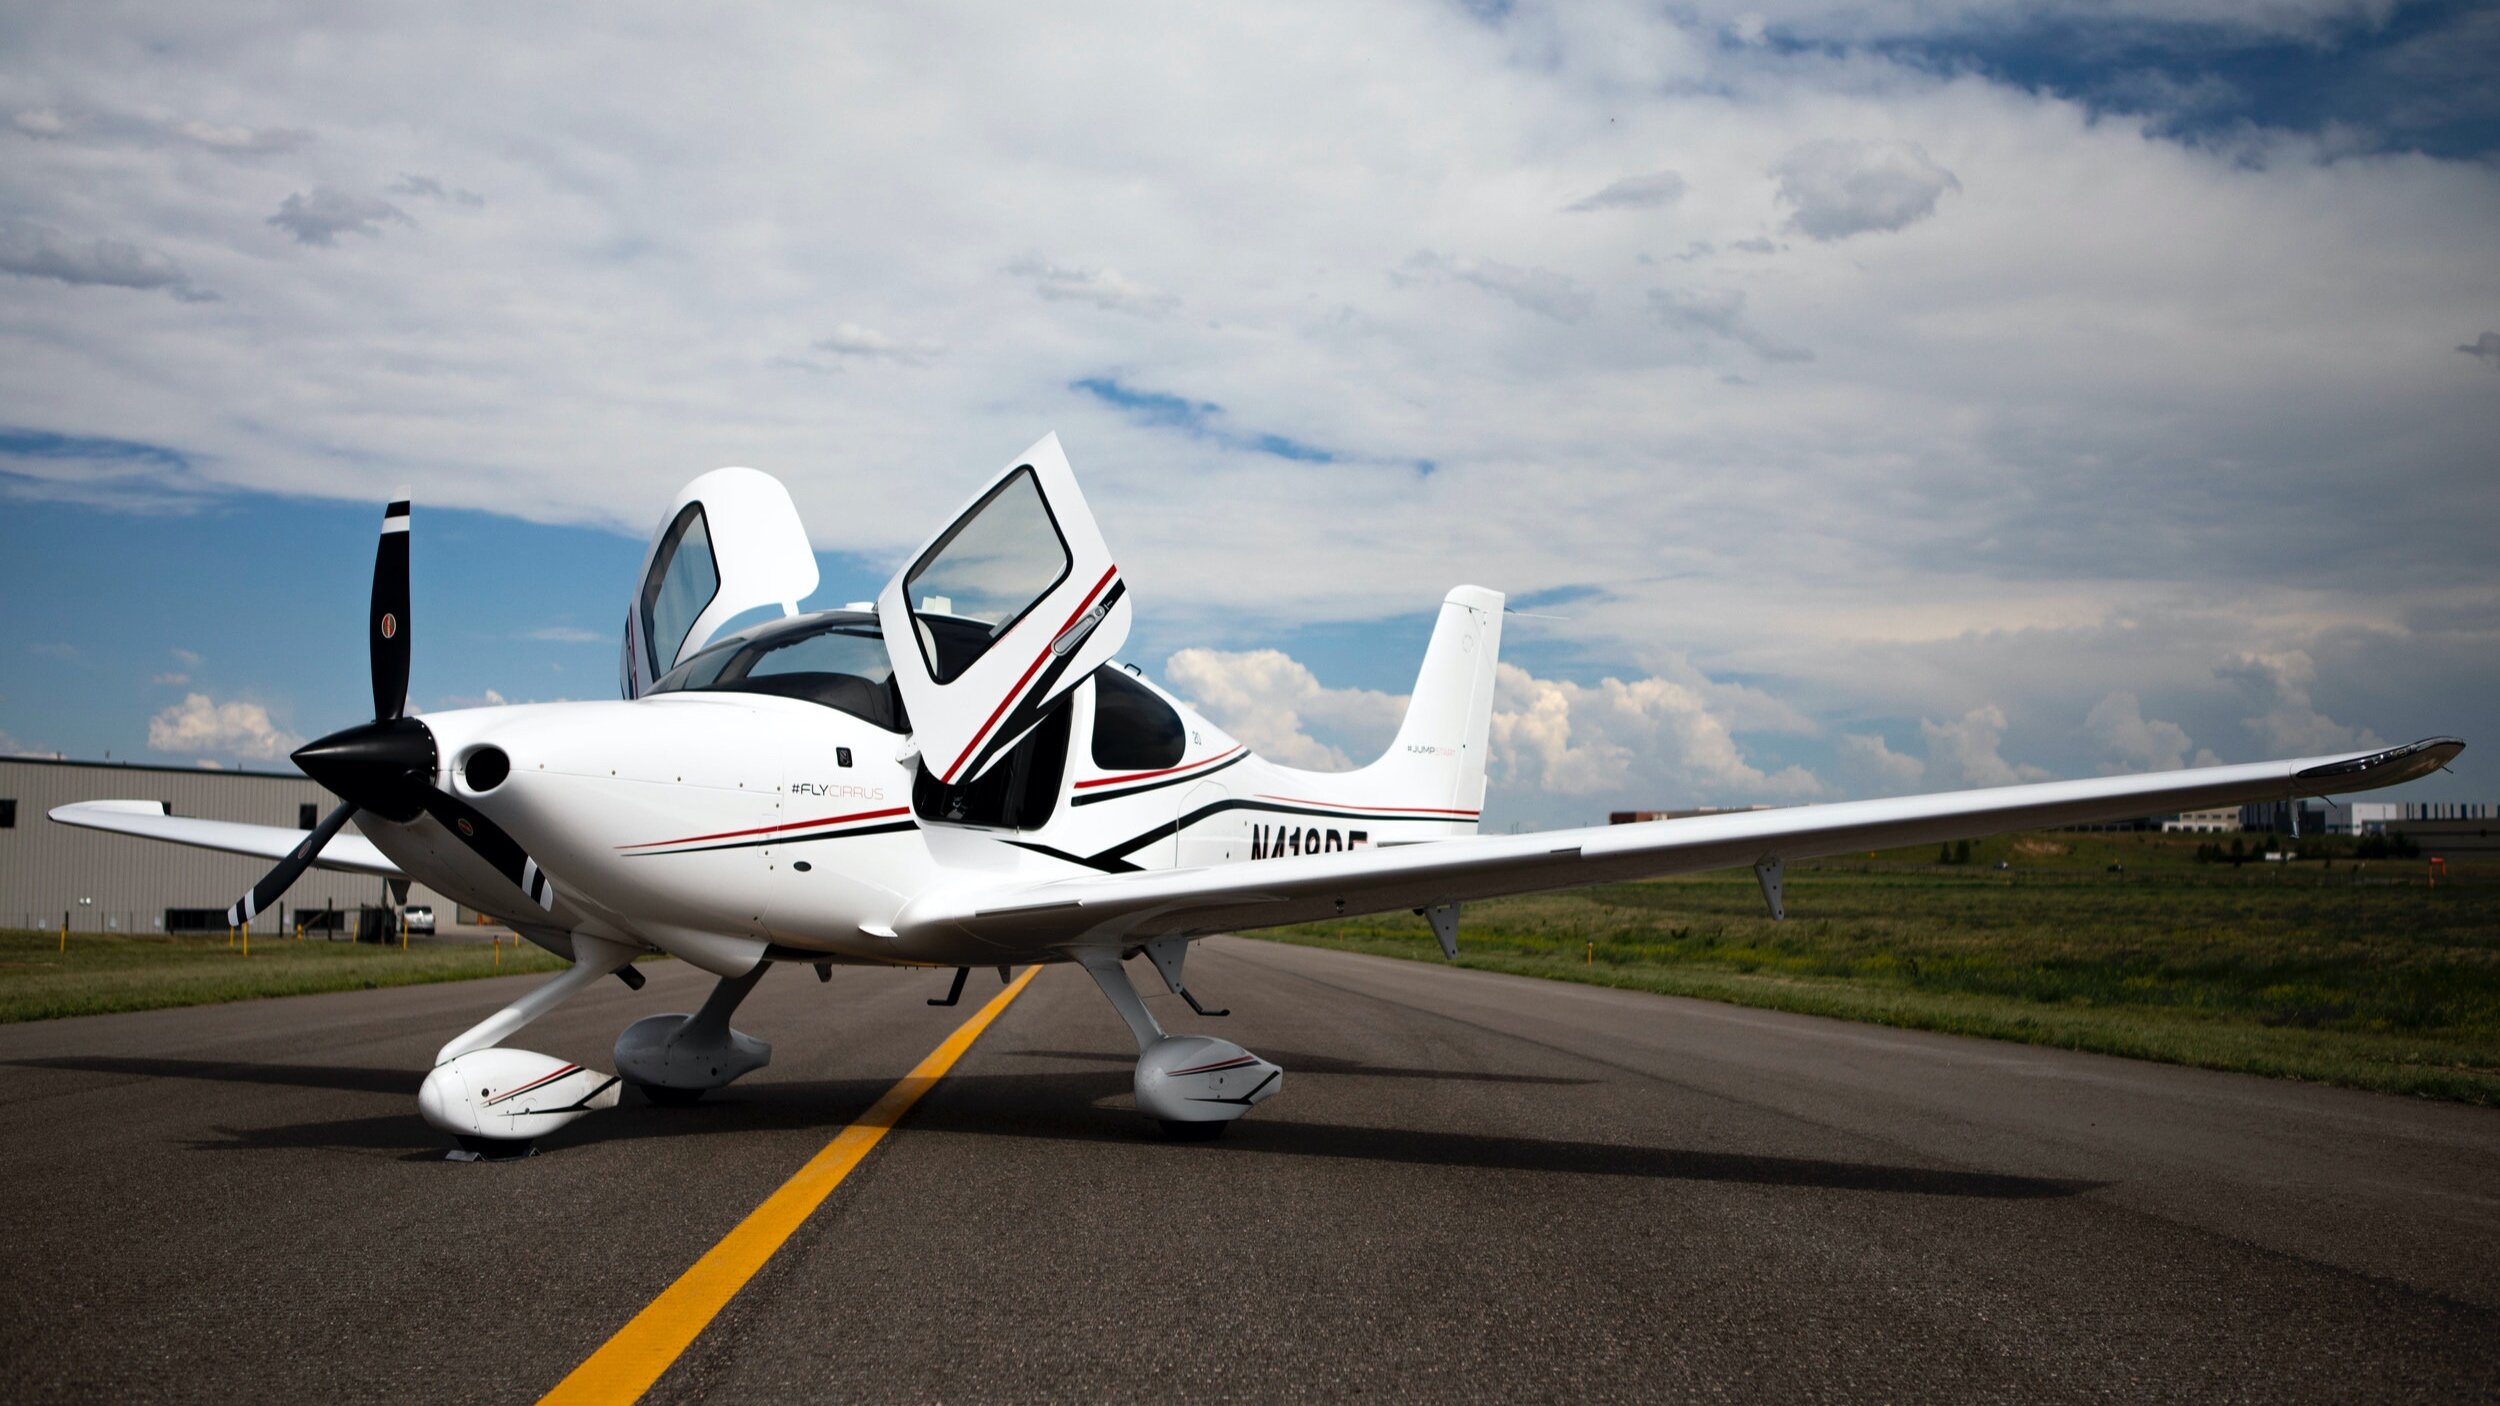 N418DE | 2019 Cirrus SR20 G6 with Air conditioning, auto pilot, and Garmin Perspective+ avionics